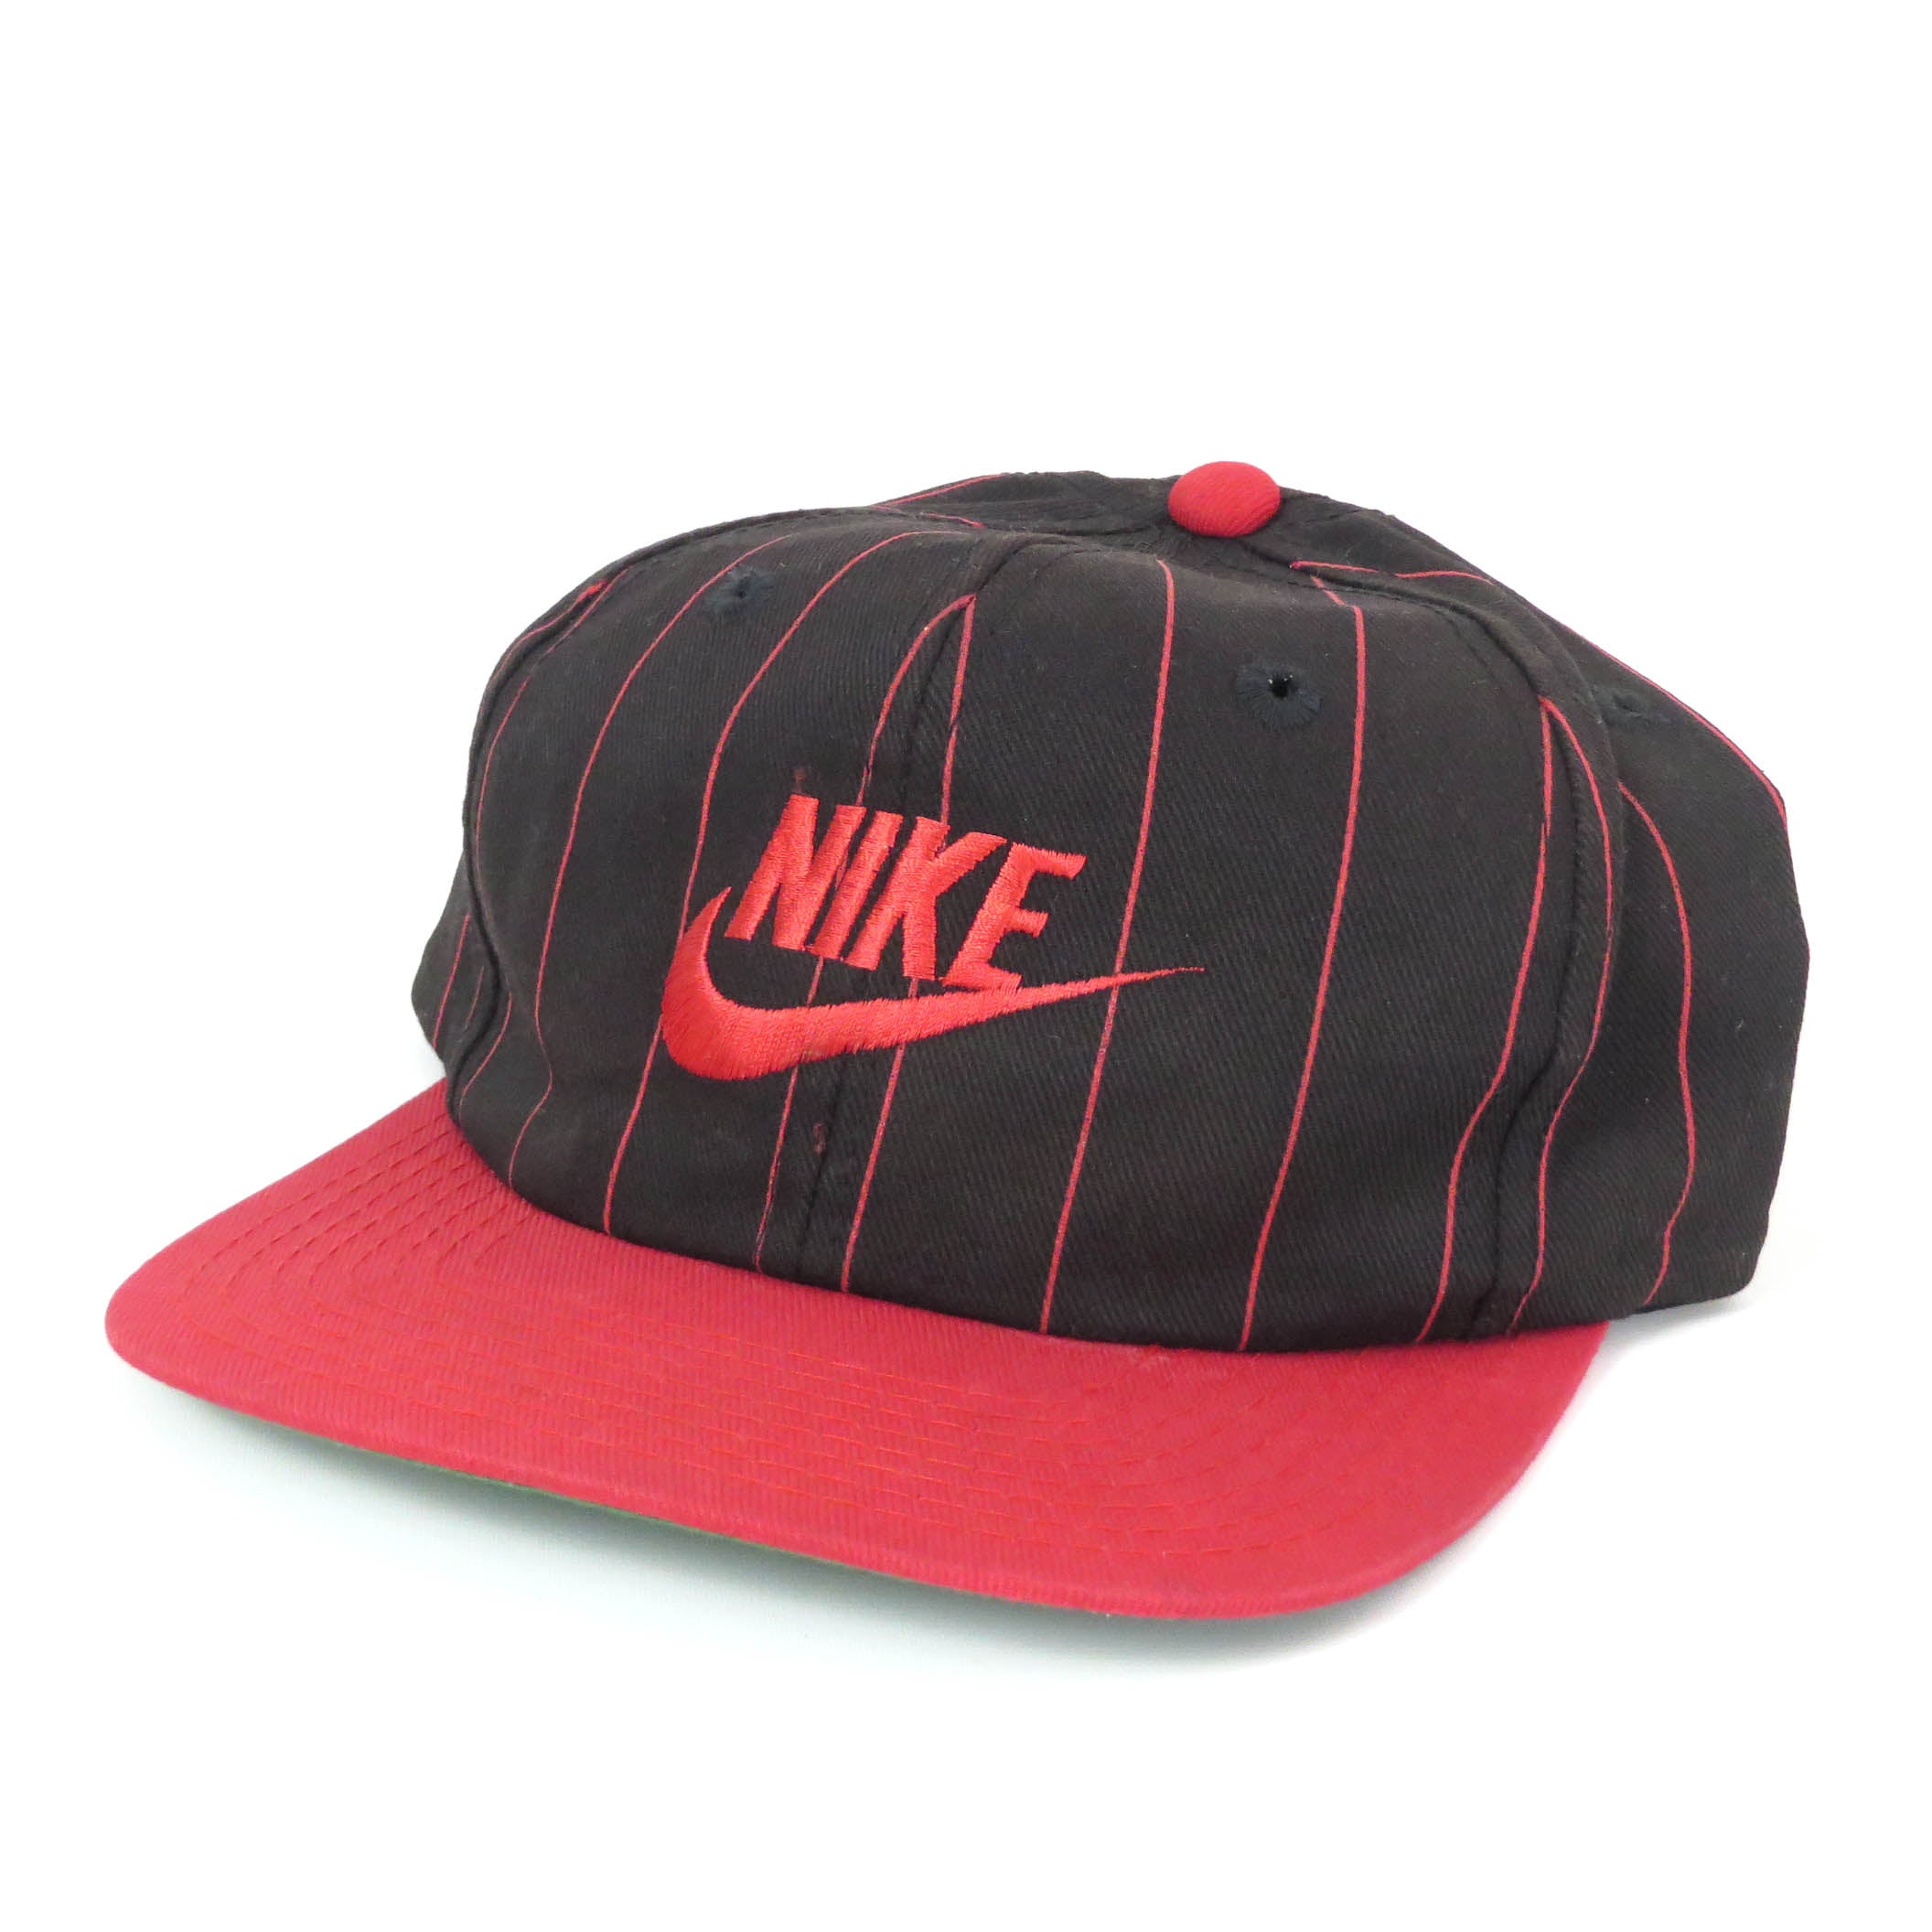 Vintage Nike Two-Tone Pinstripe Snapback Hat